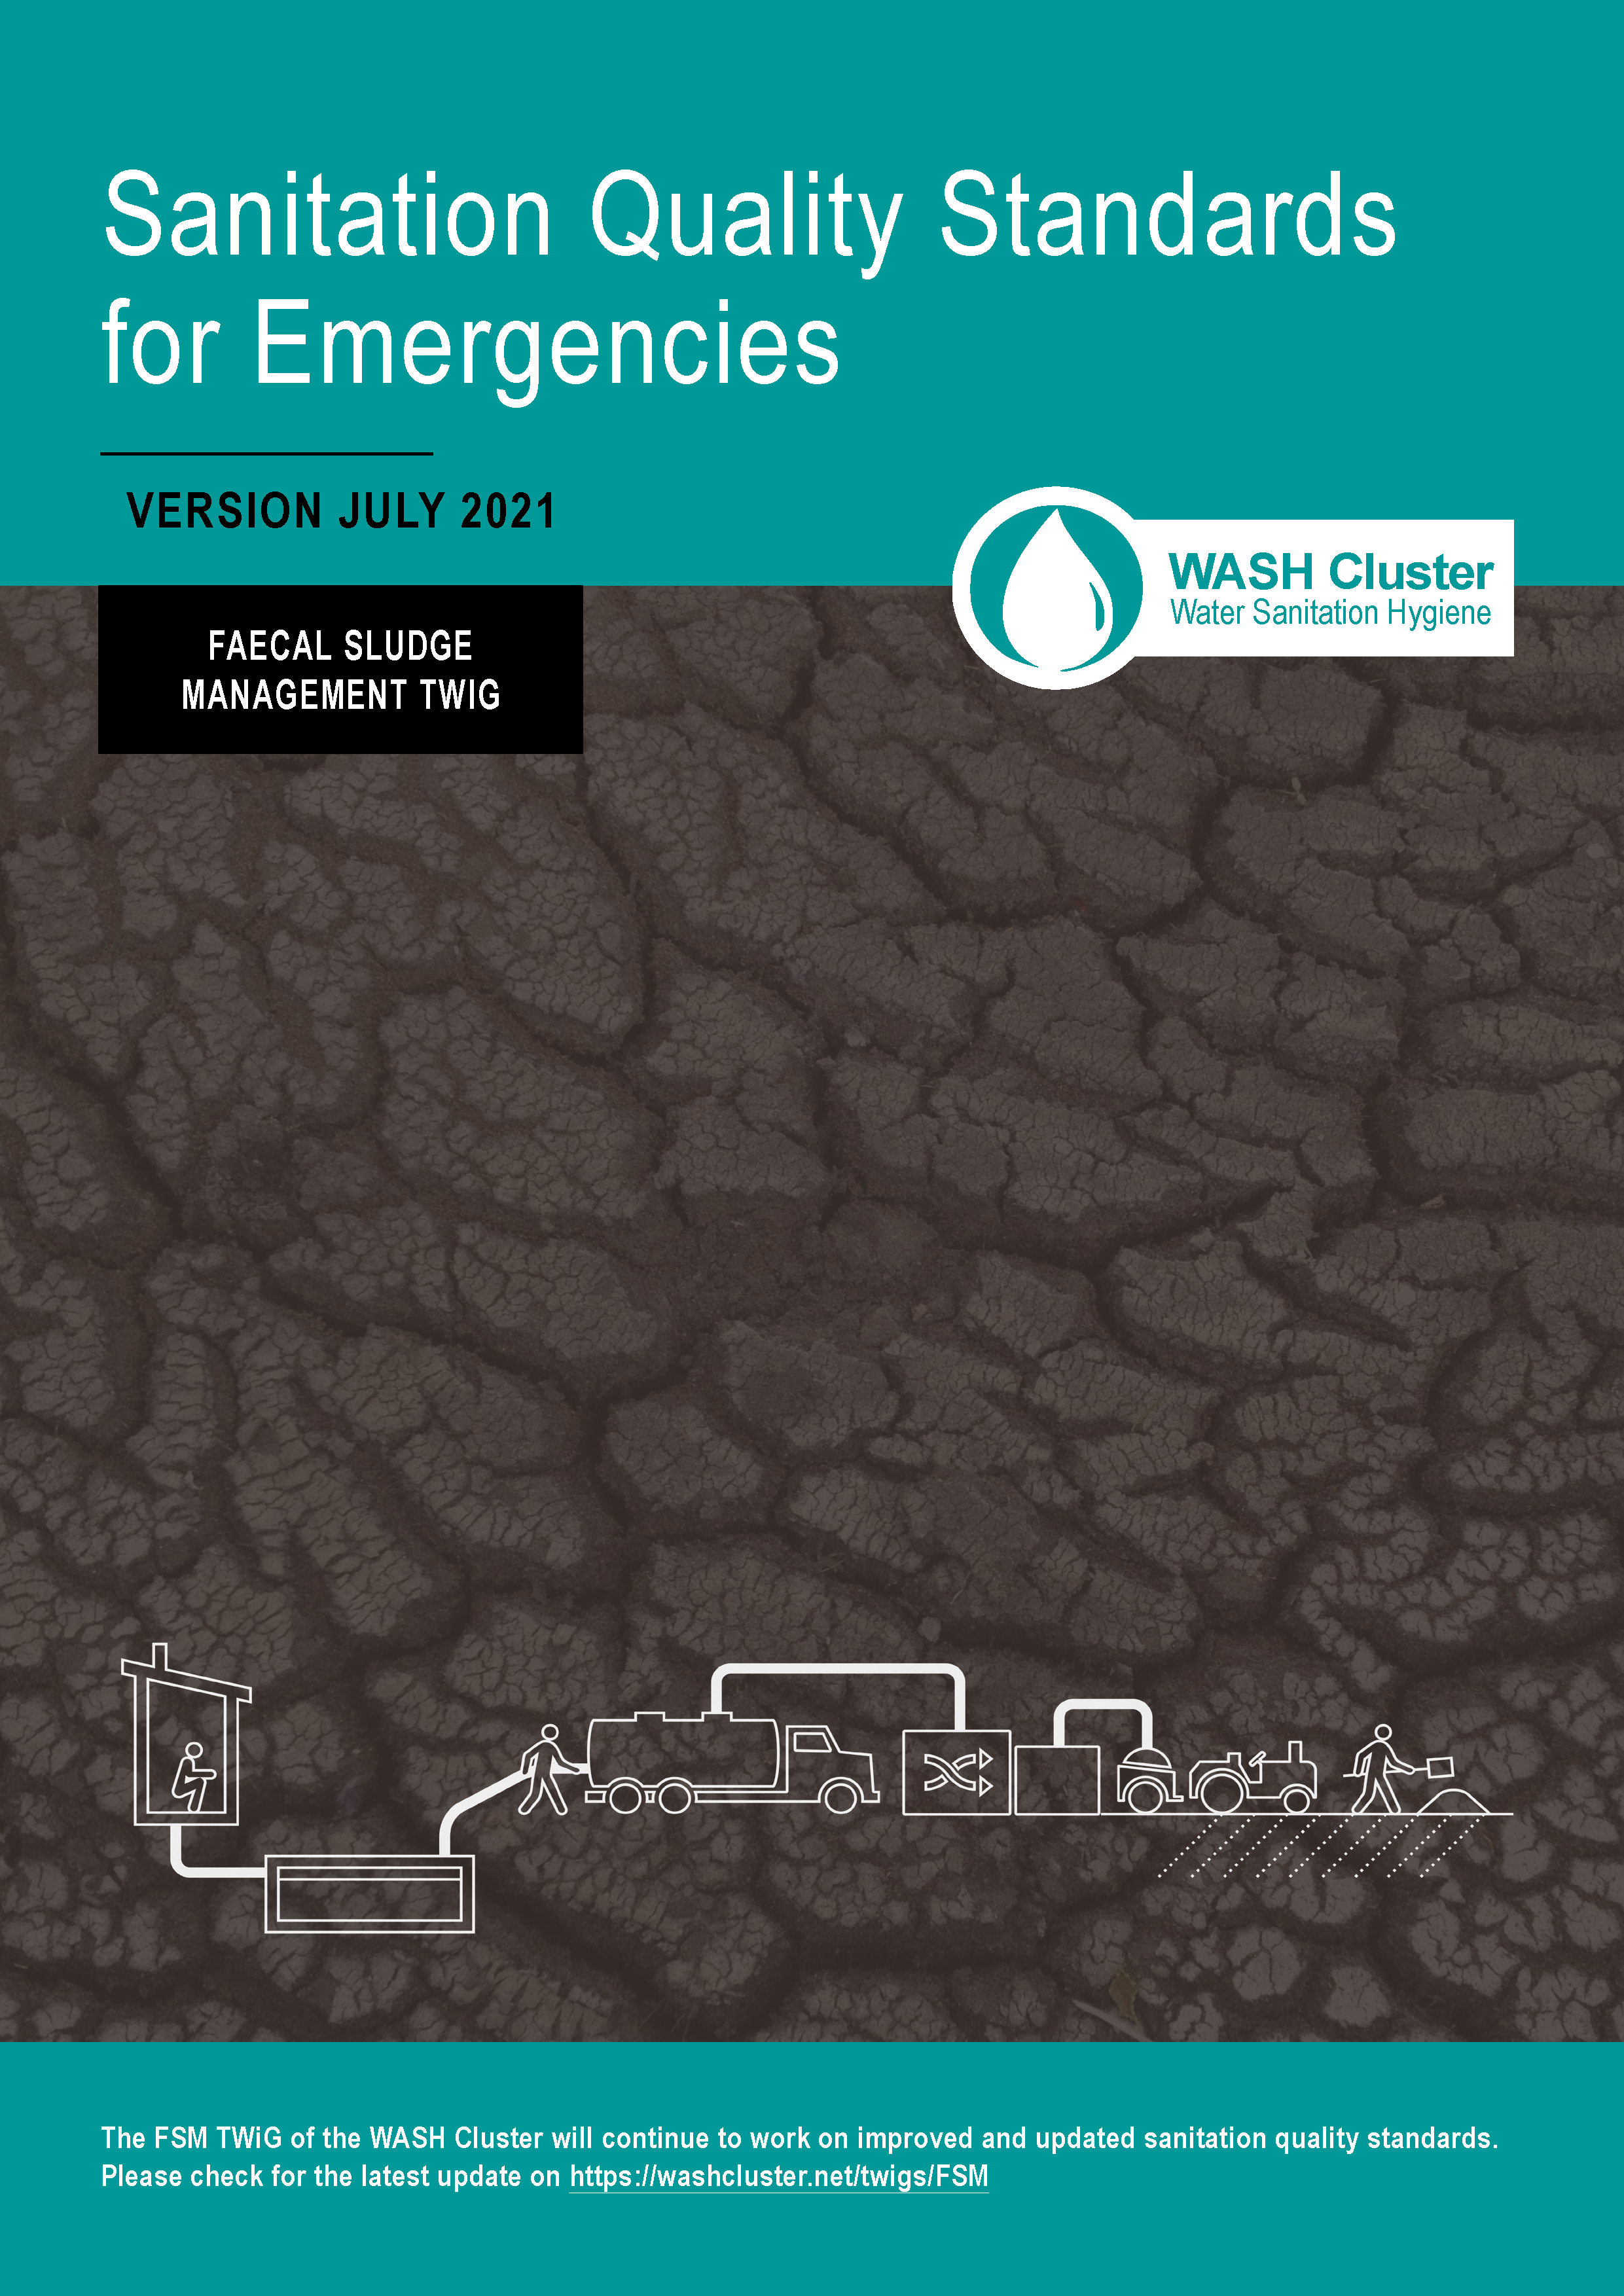 Cover page for Faecal Sludge Management Sanitation Standards for Emergencies